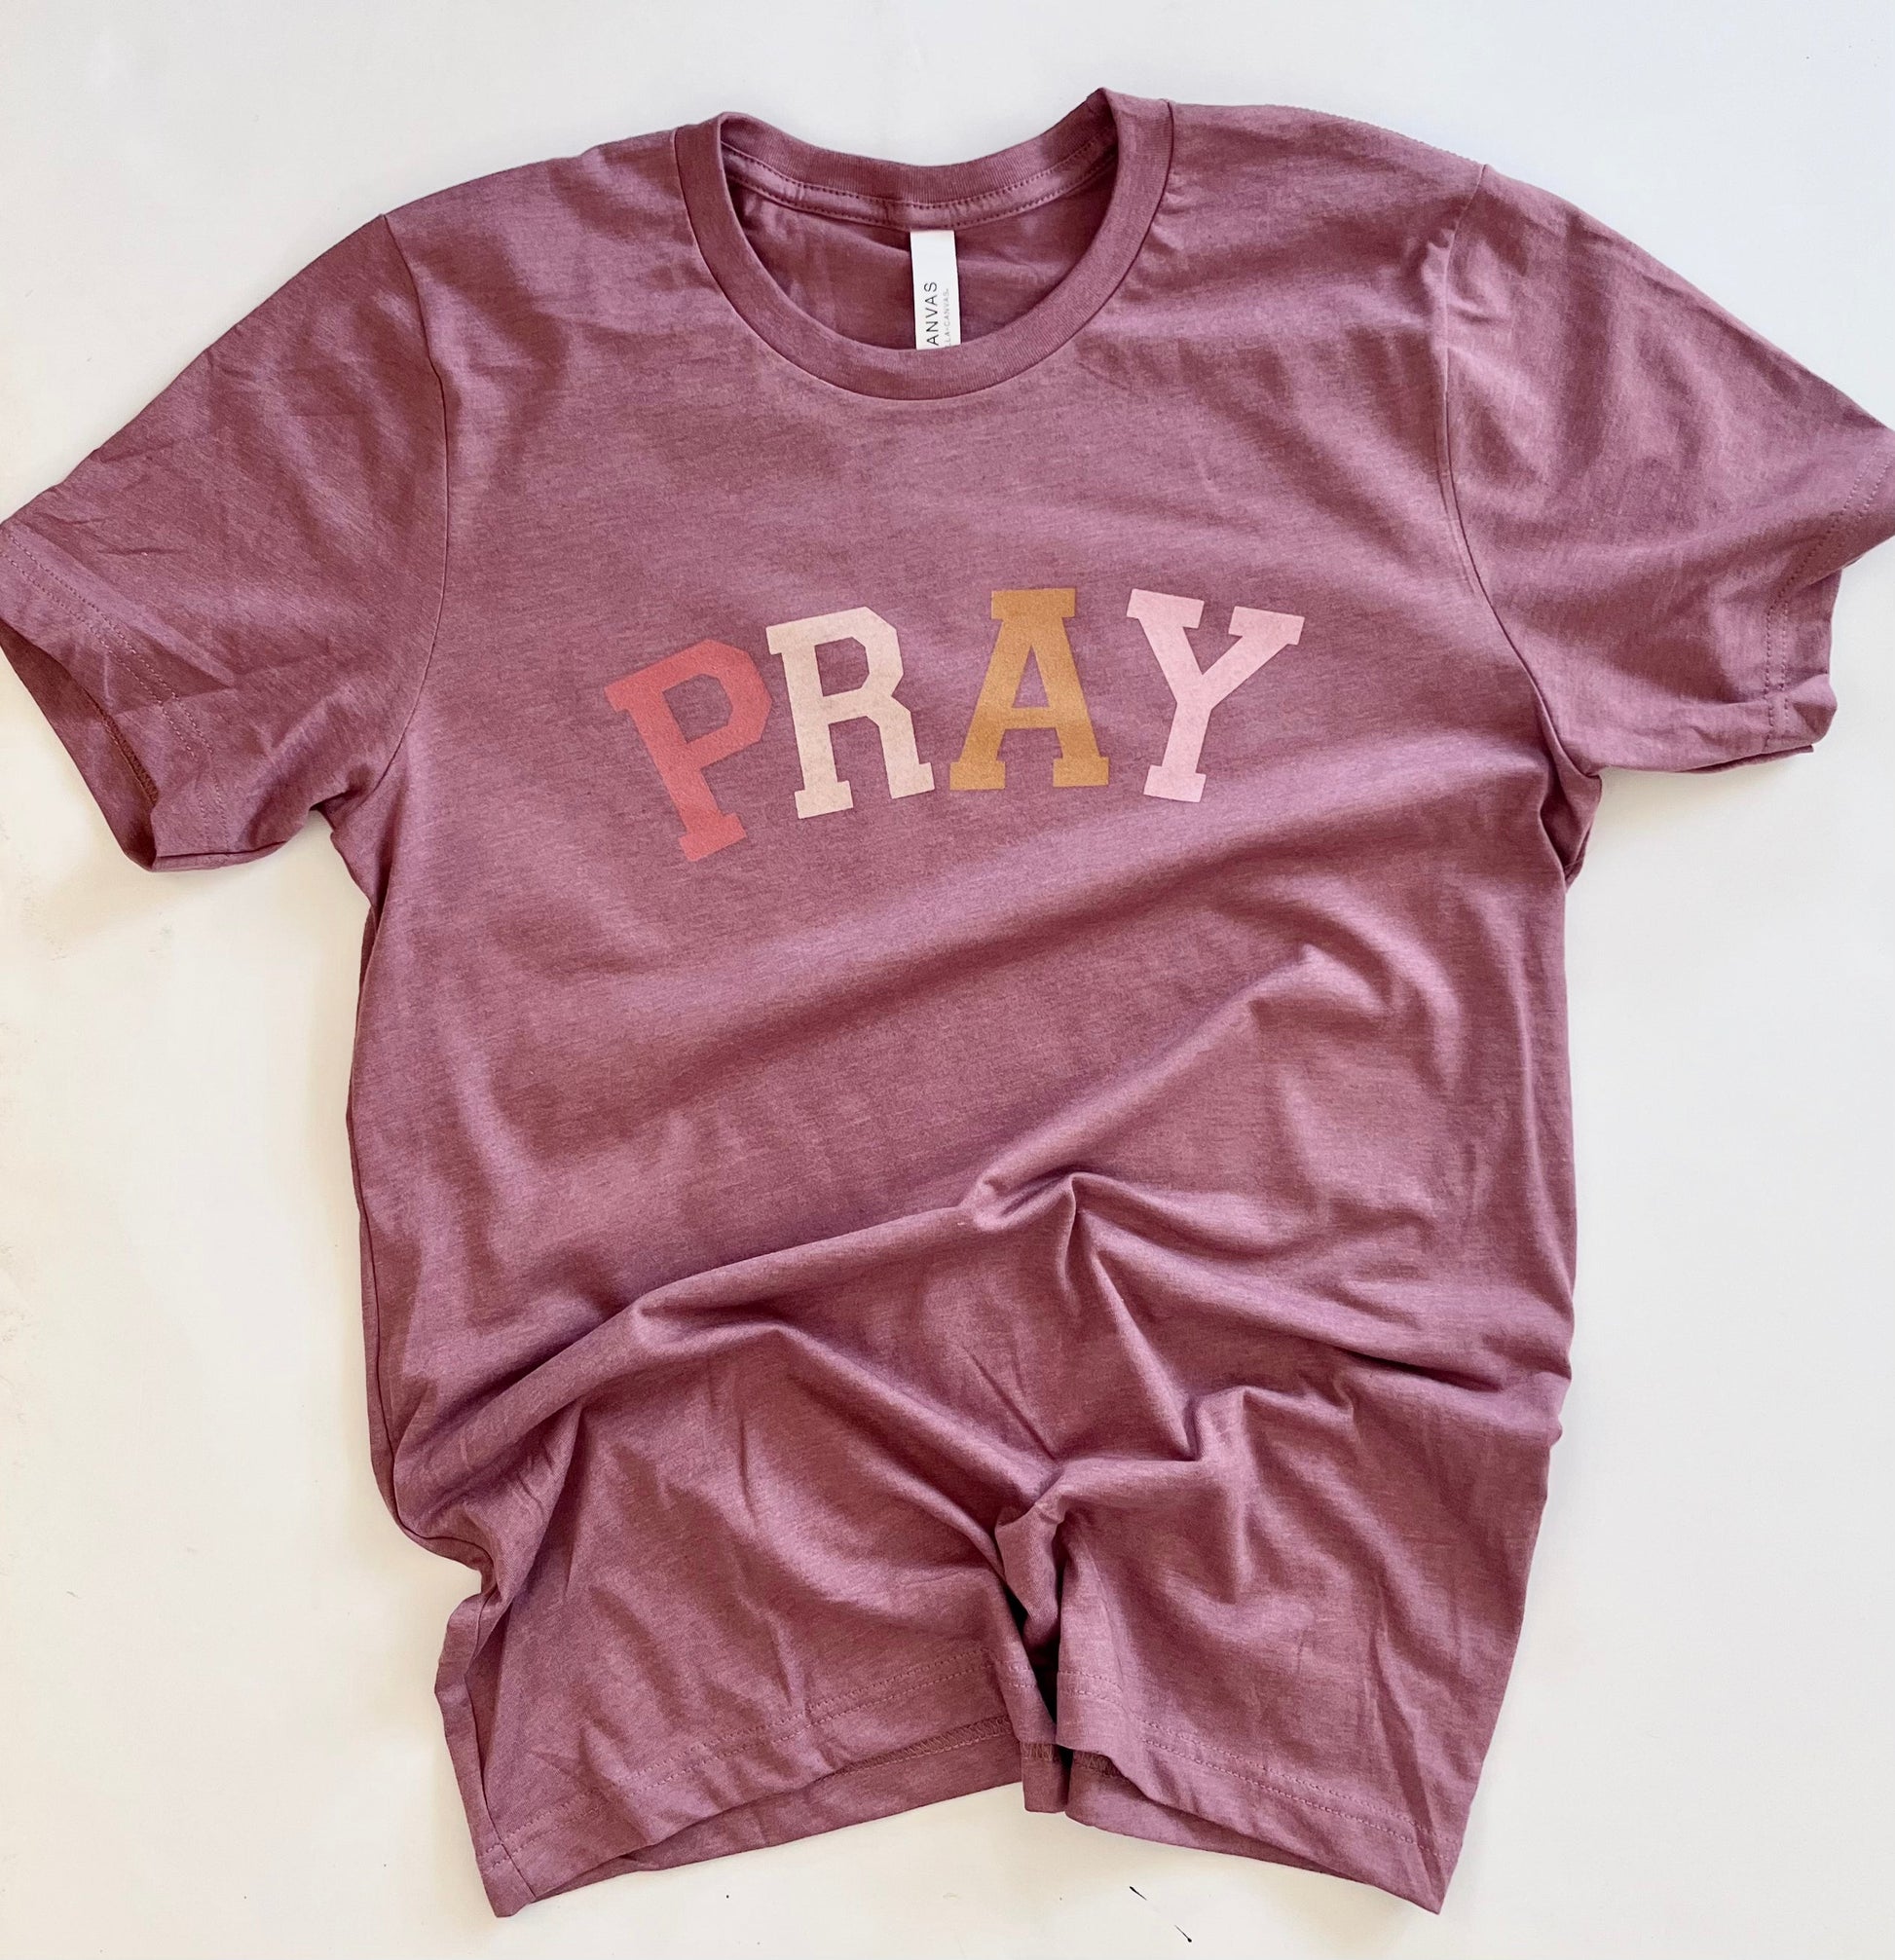 Pray Multi | Tee | Kids-Kids Tees-Sister Shirts-Sister Shirts, Cute & Custom Tees for Mama & Littles in Trussville, Alabama.